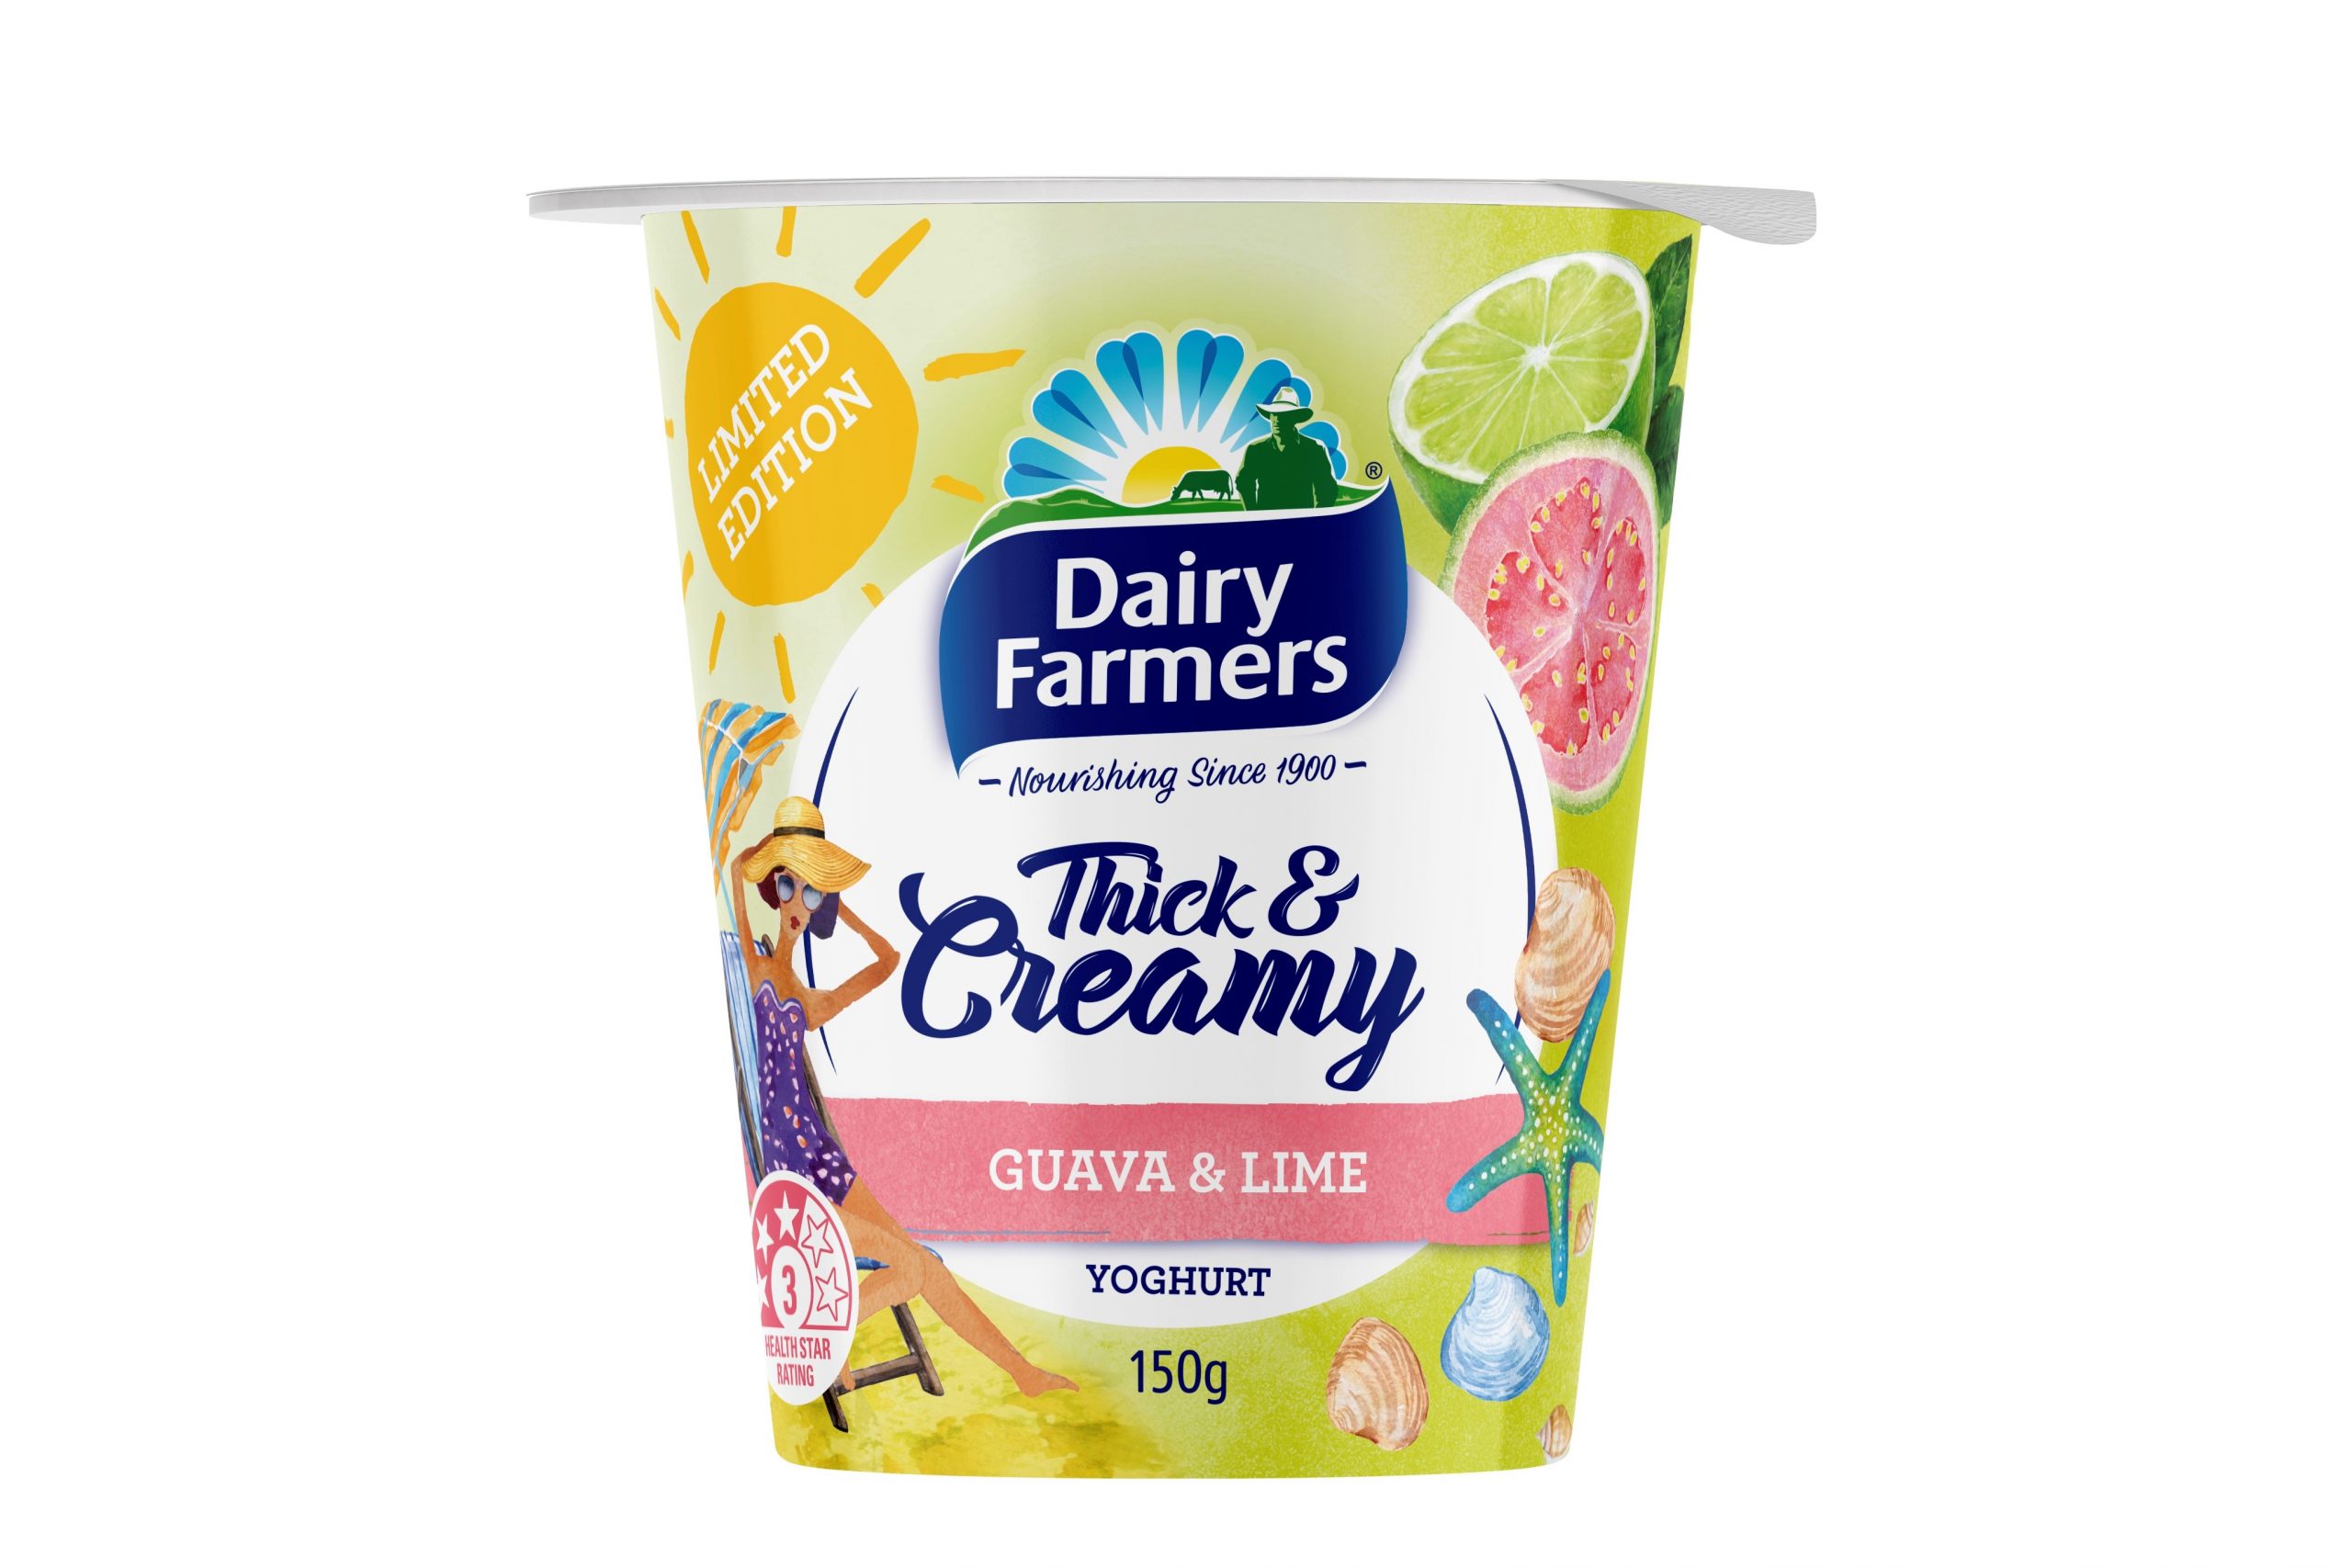 Dairy Farmers launches summer-themed yoghurt - Retail World Magazine